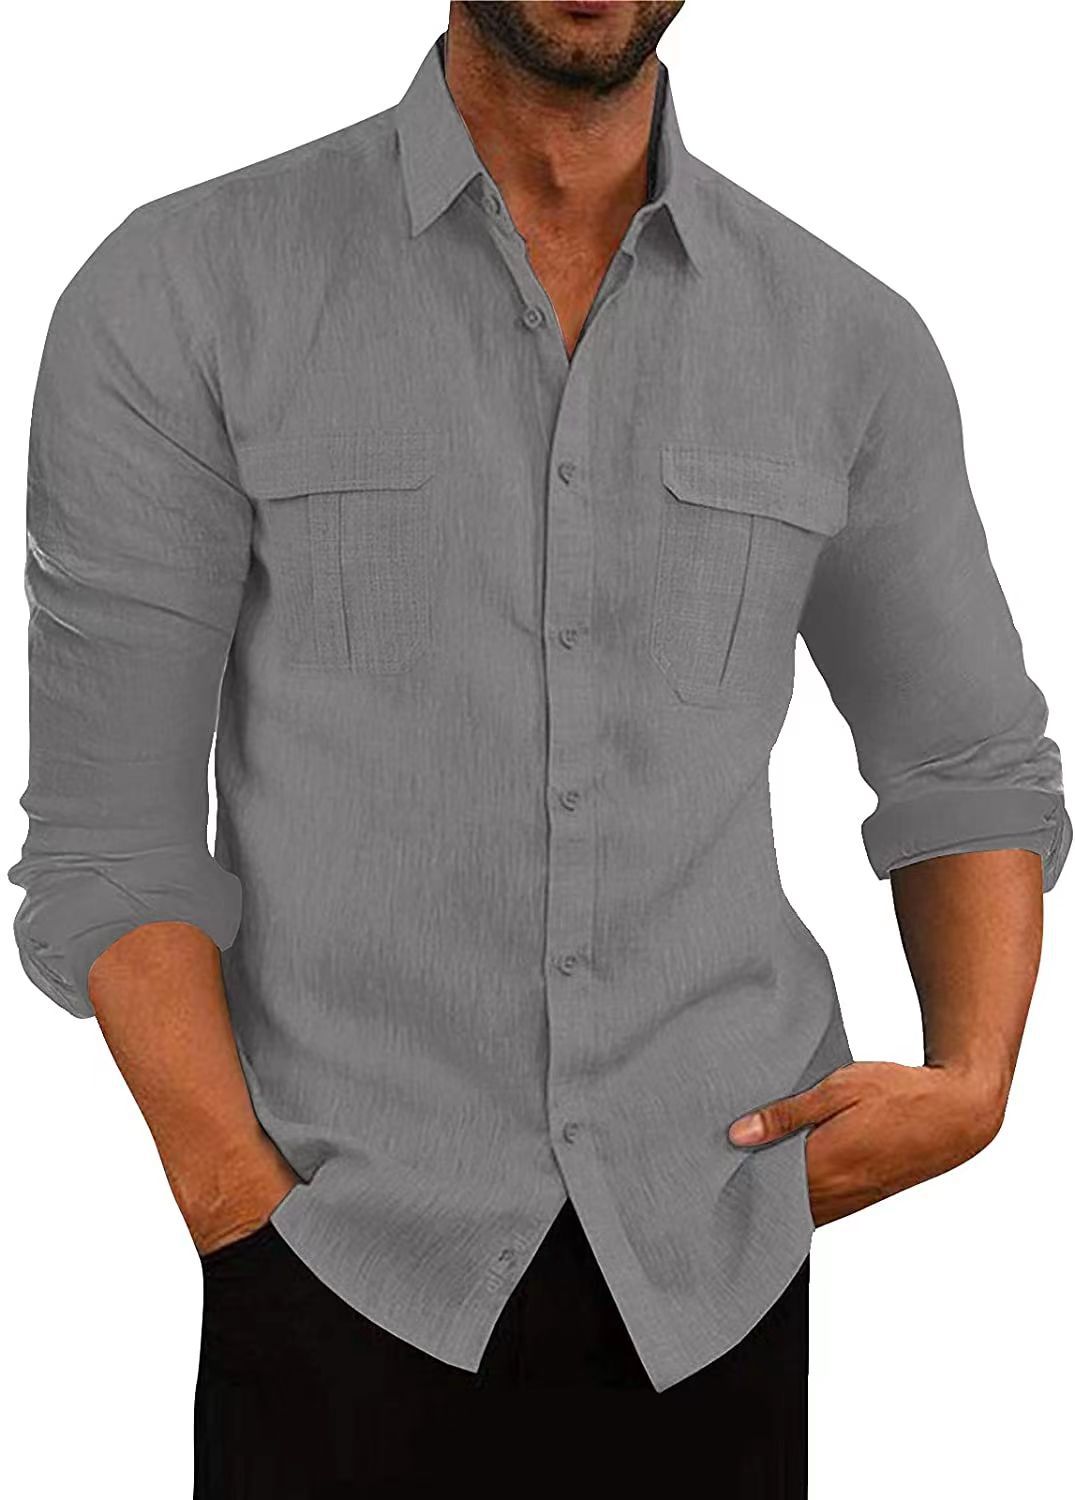 European And American Men's Shirt Double Pocket Cotton Linen